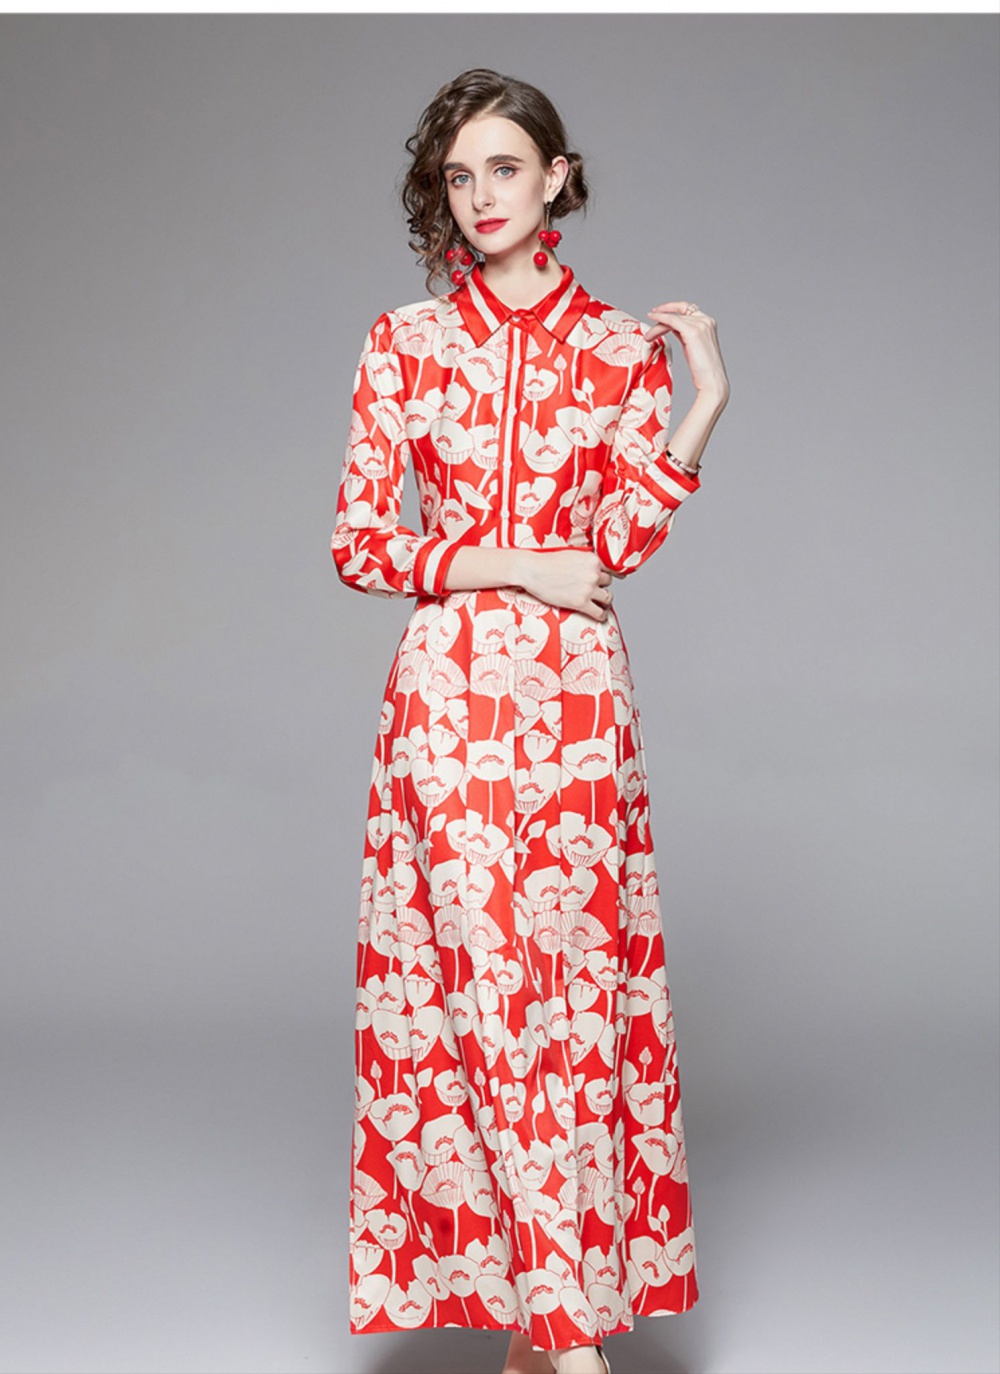 Slim fashion pinched waist printing all-match dress